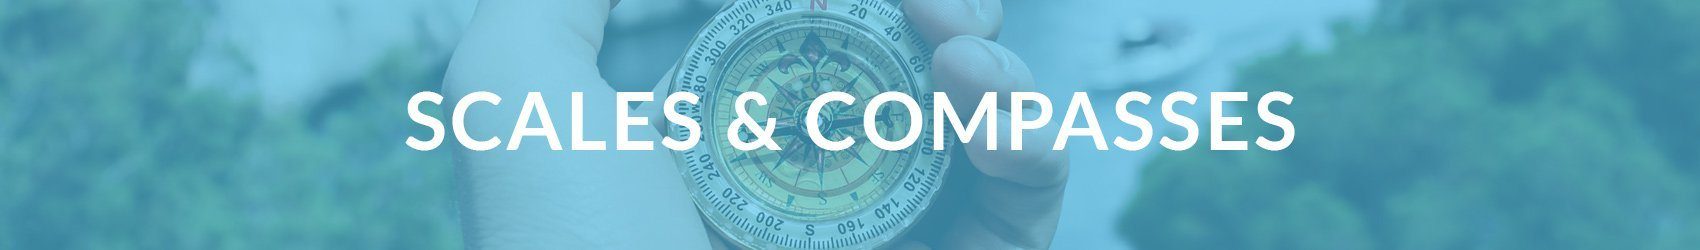 Scales & Compasses